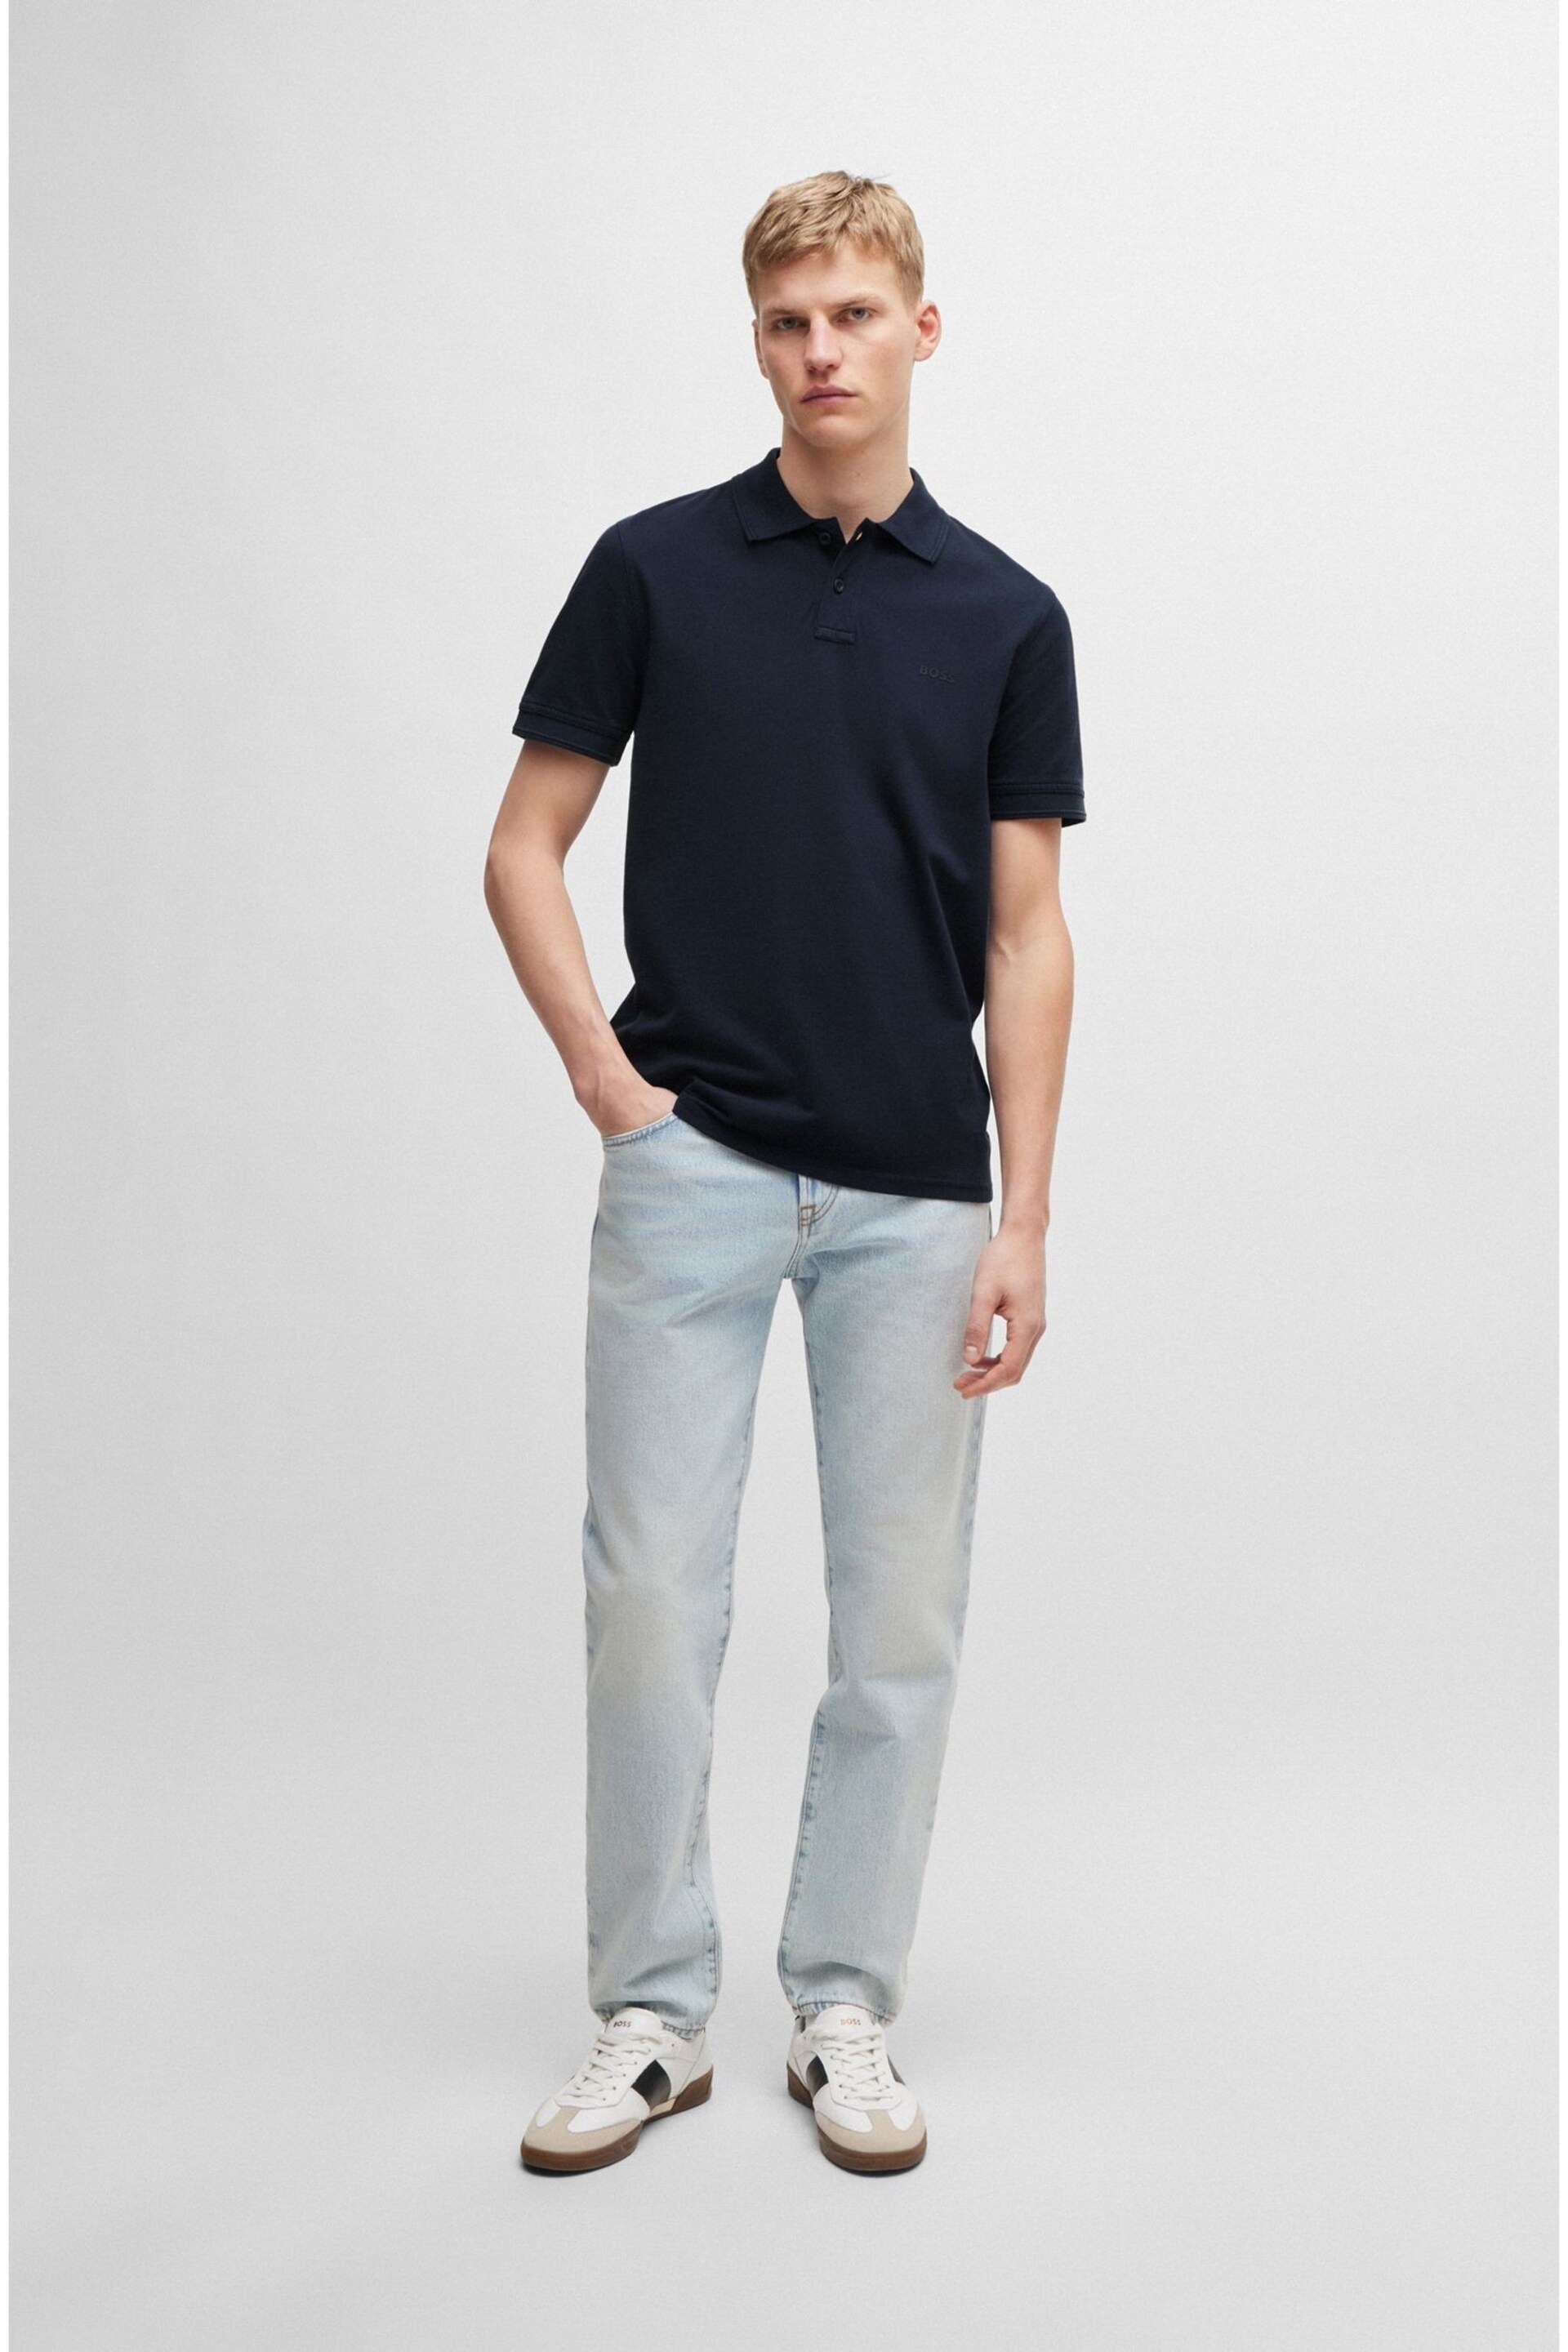 BOSS Blue Cotton Pique Polo Shirt - Image 3 of 5